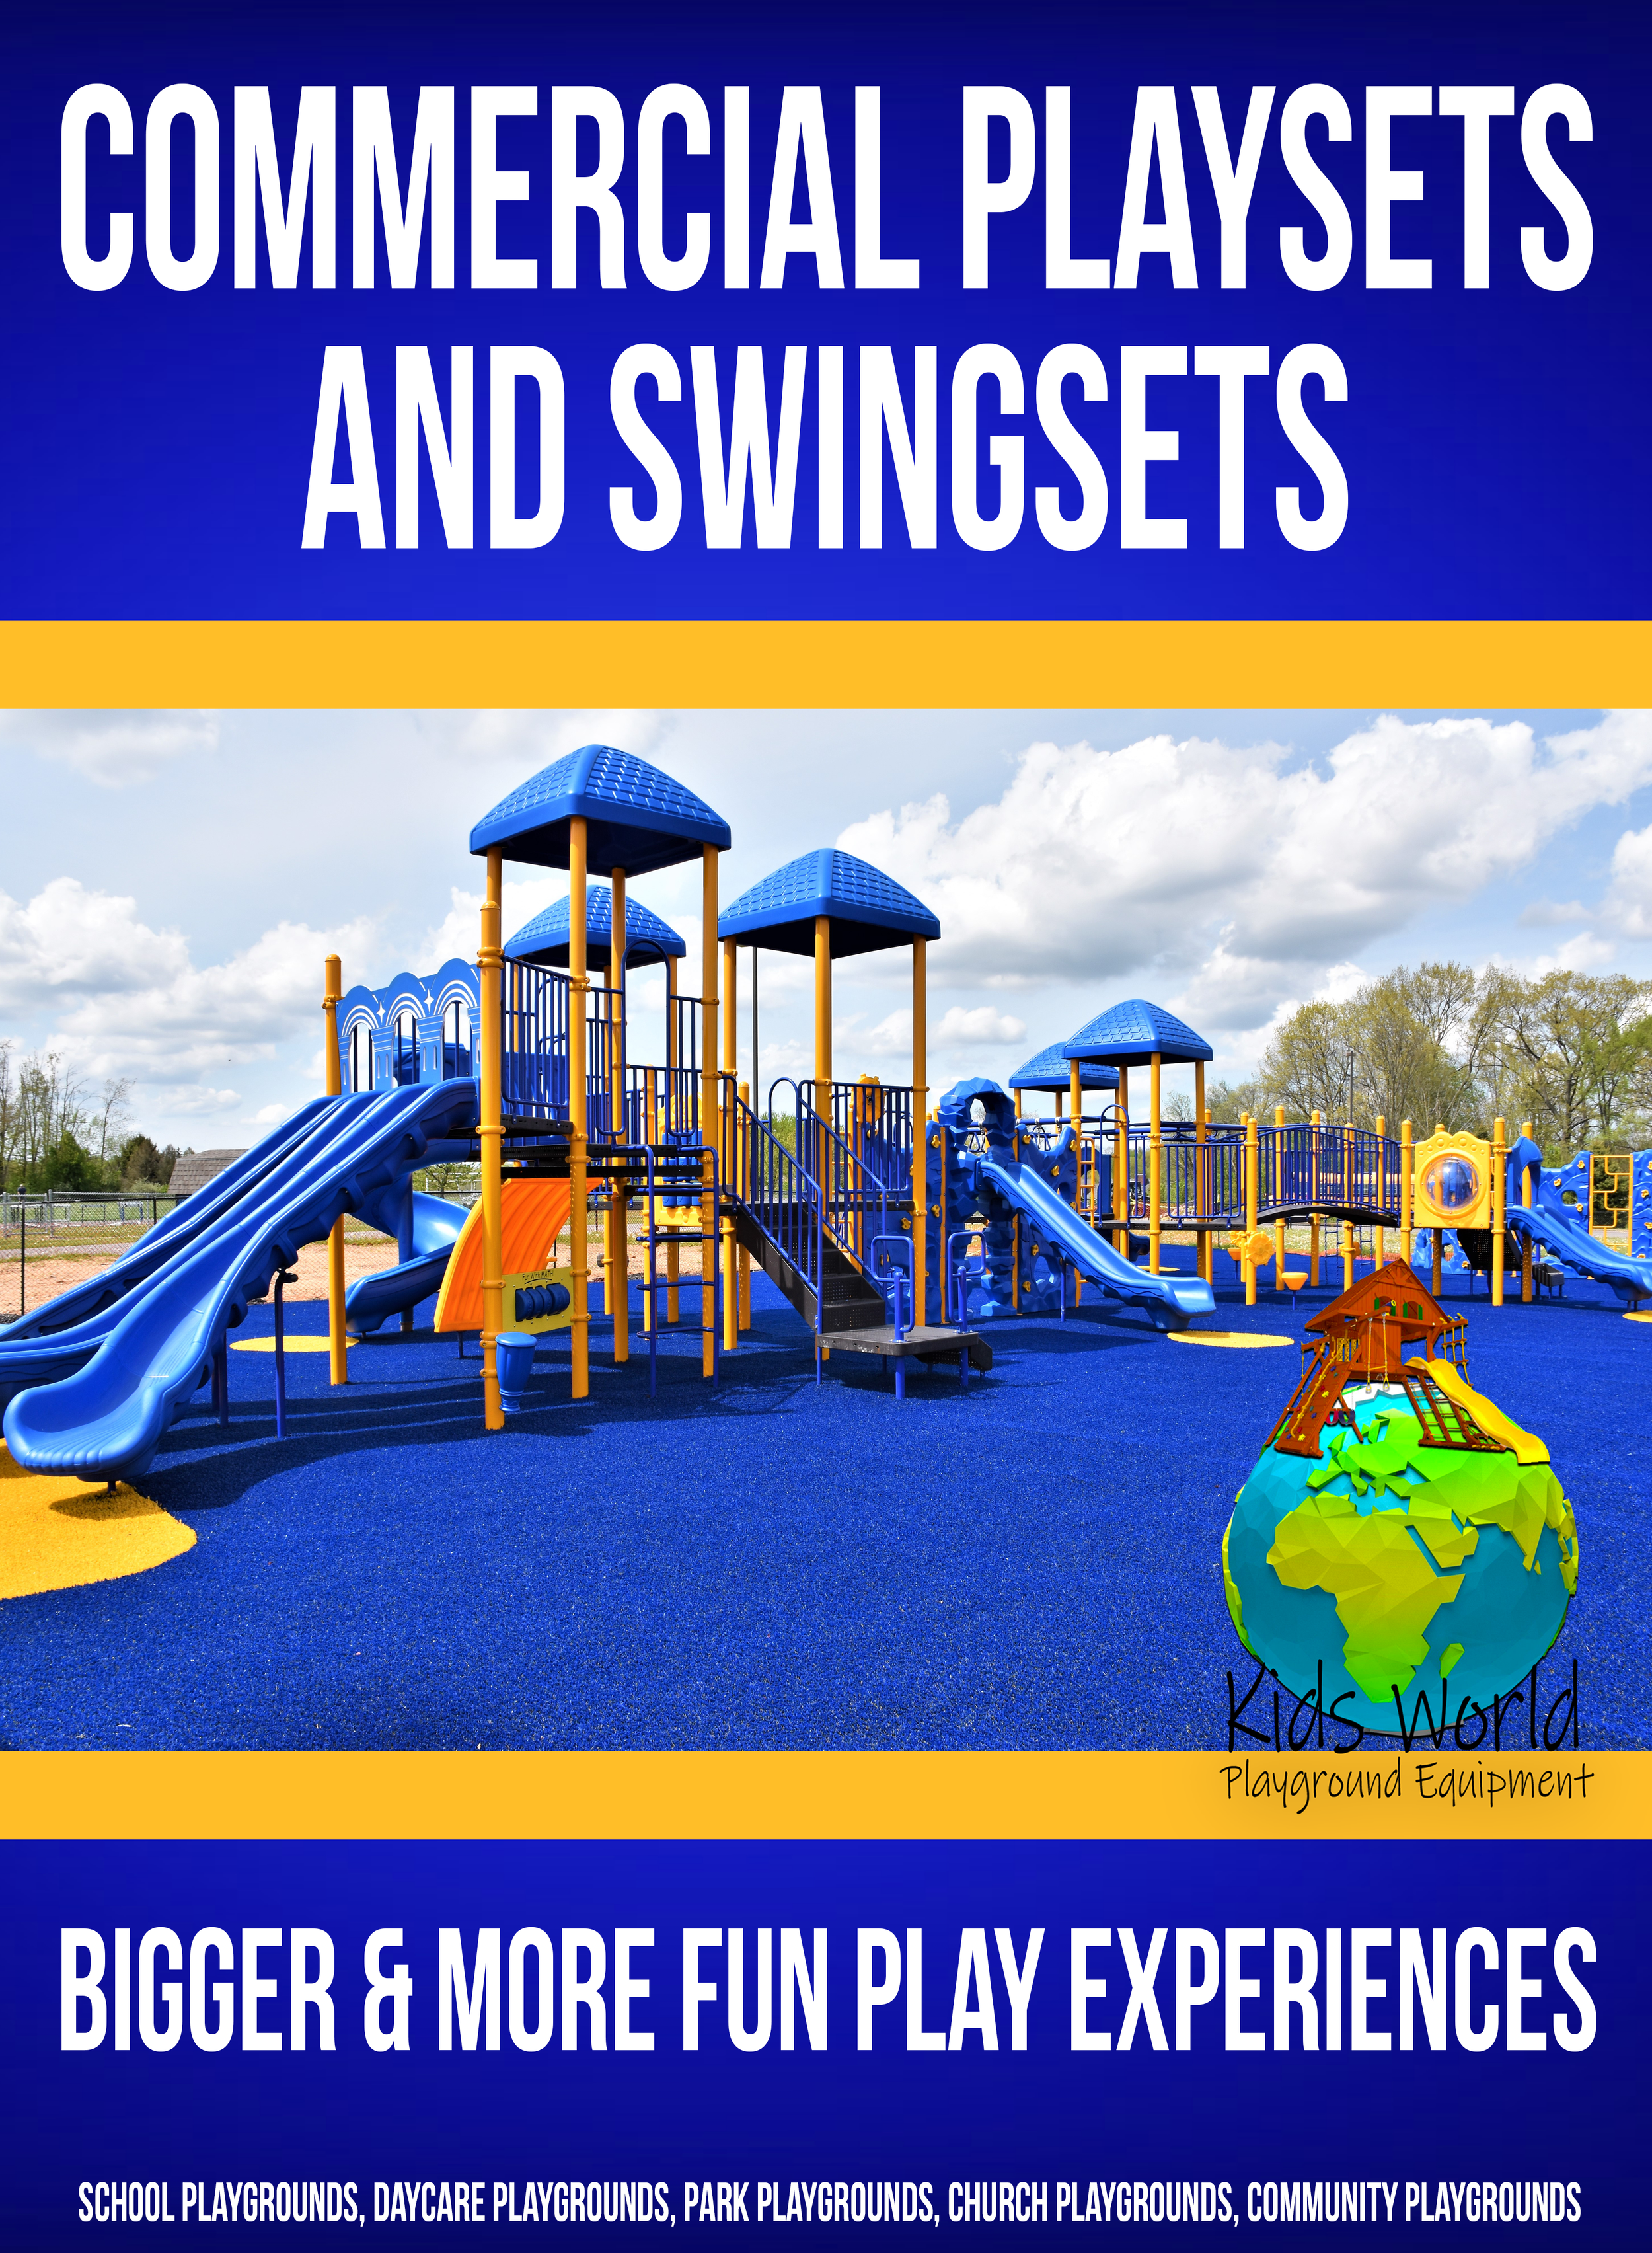 Kids World Playground Equipment Facebook Ad 4.png